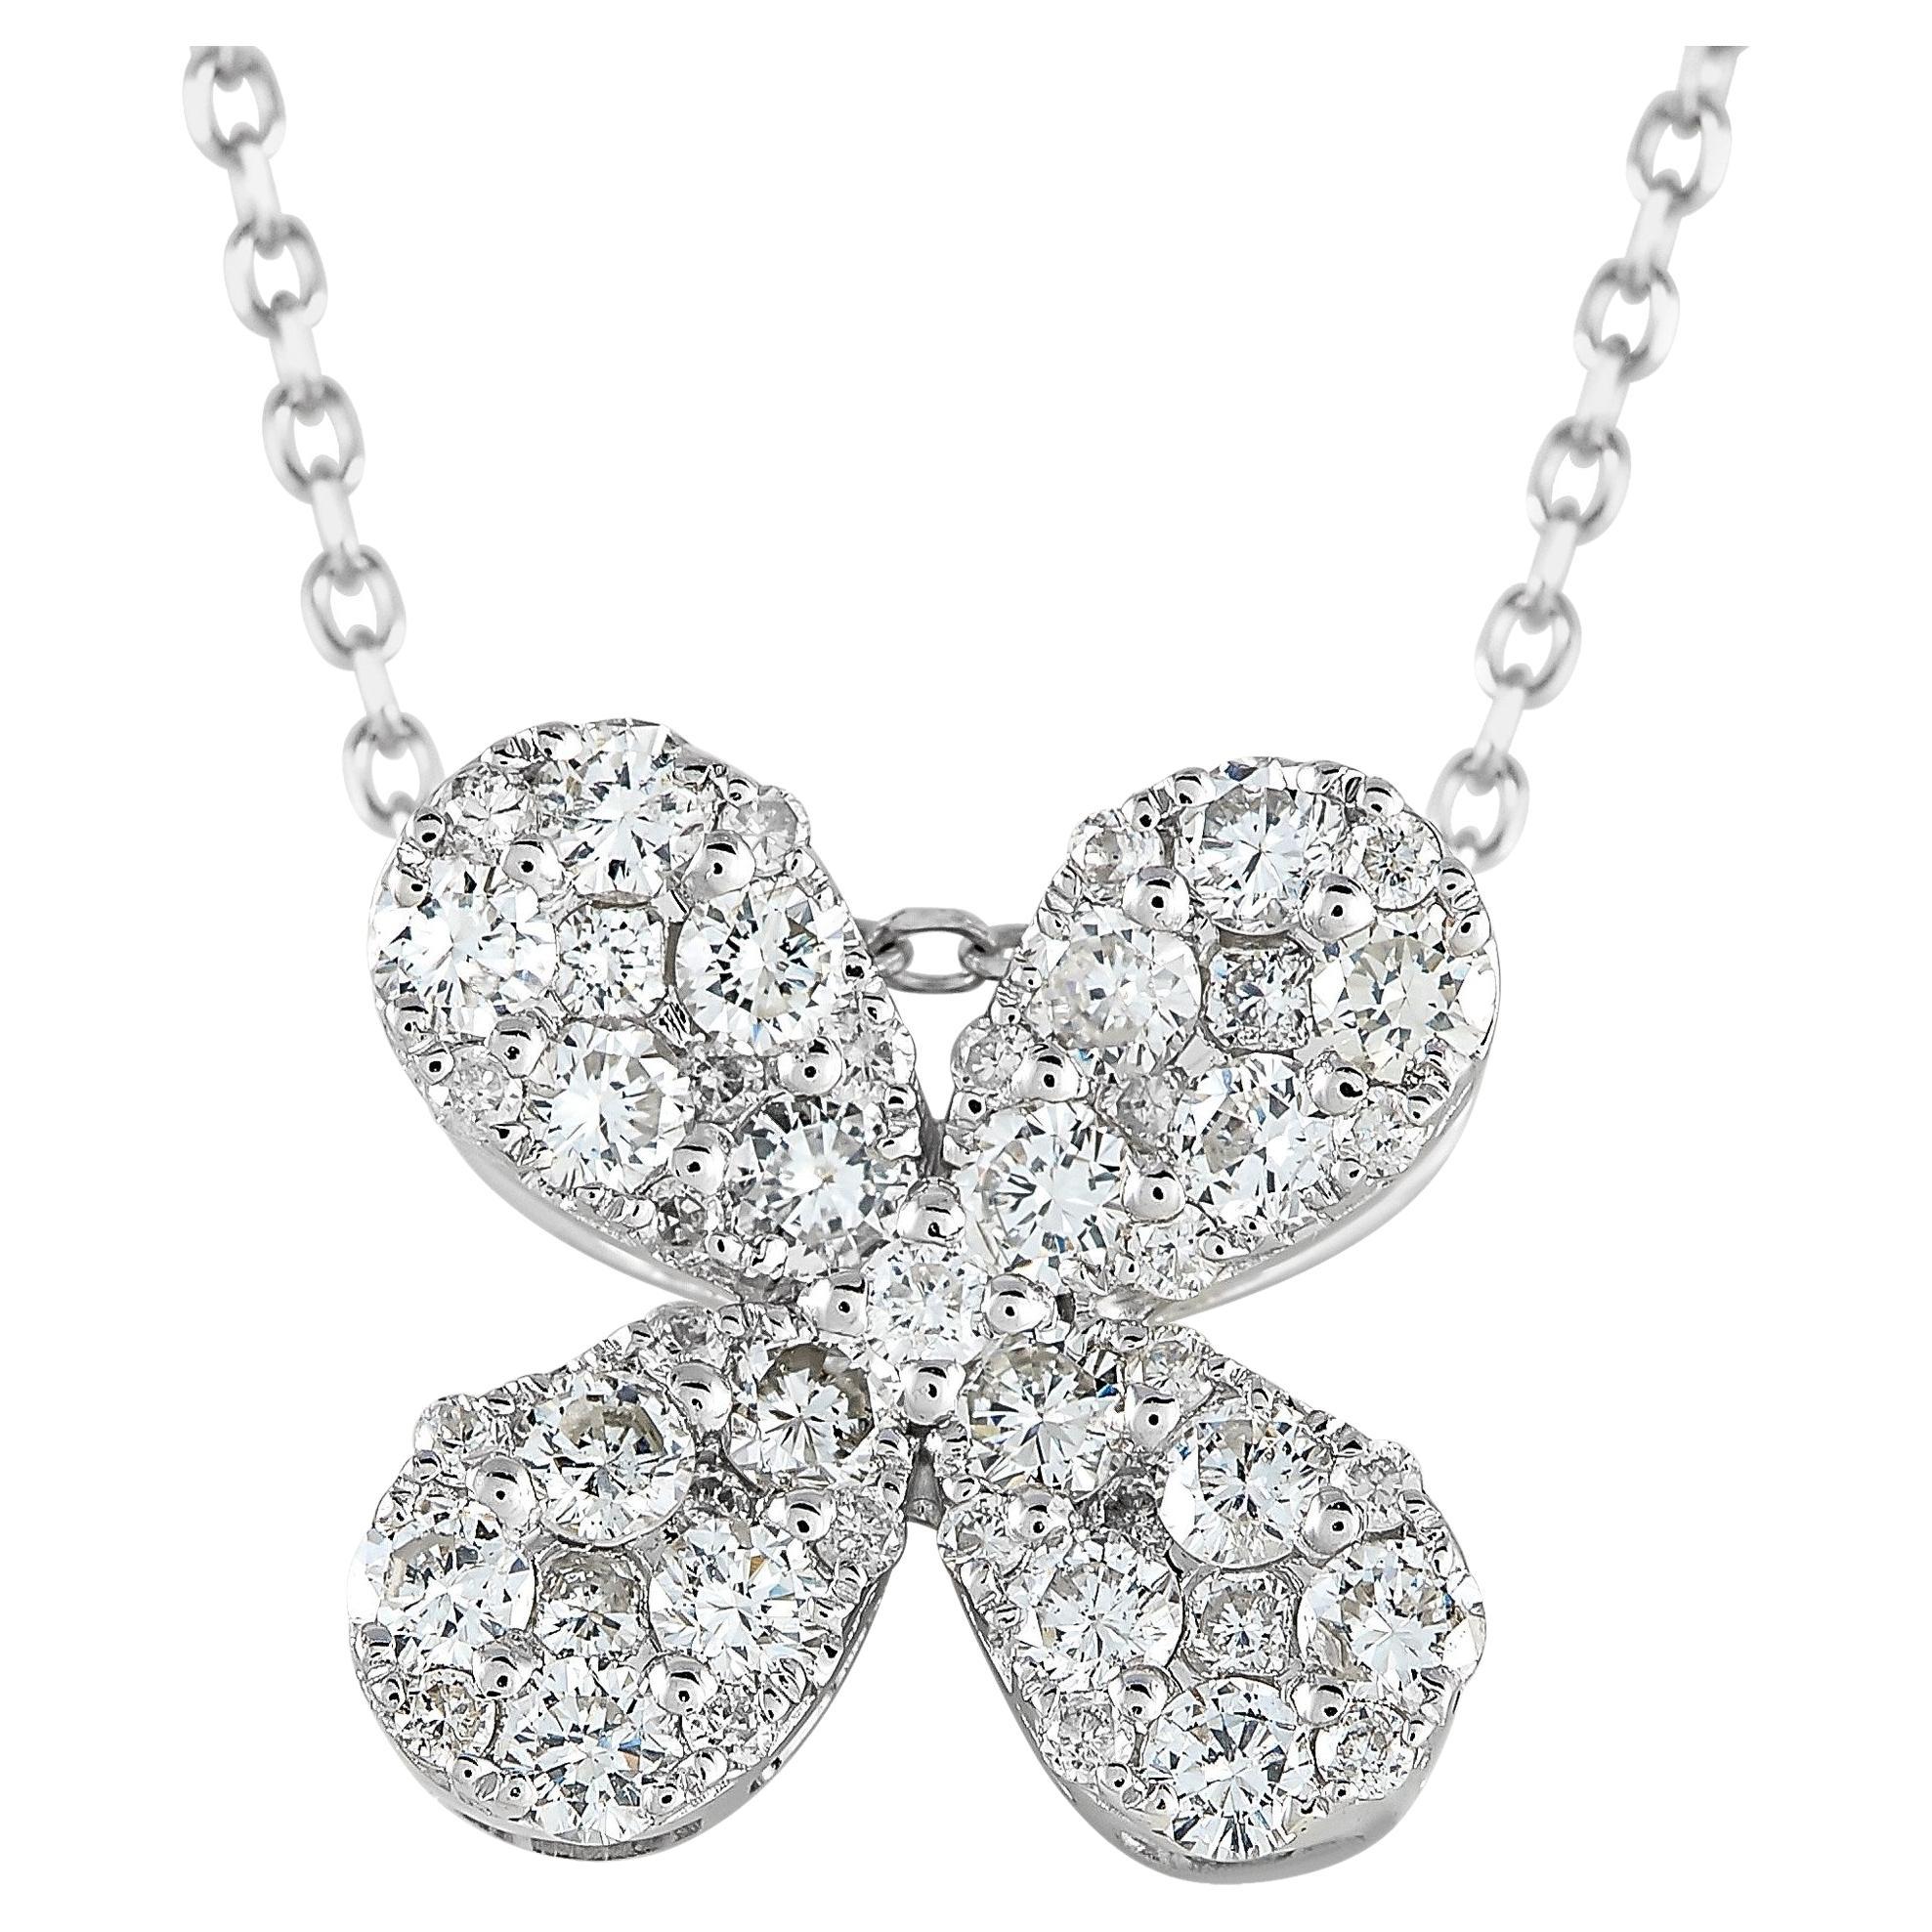 LB Exclusive 18k White Gold 0.50 Carat Diamond Necklace